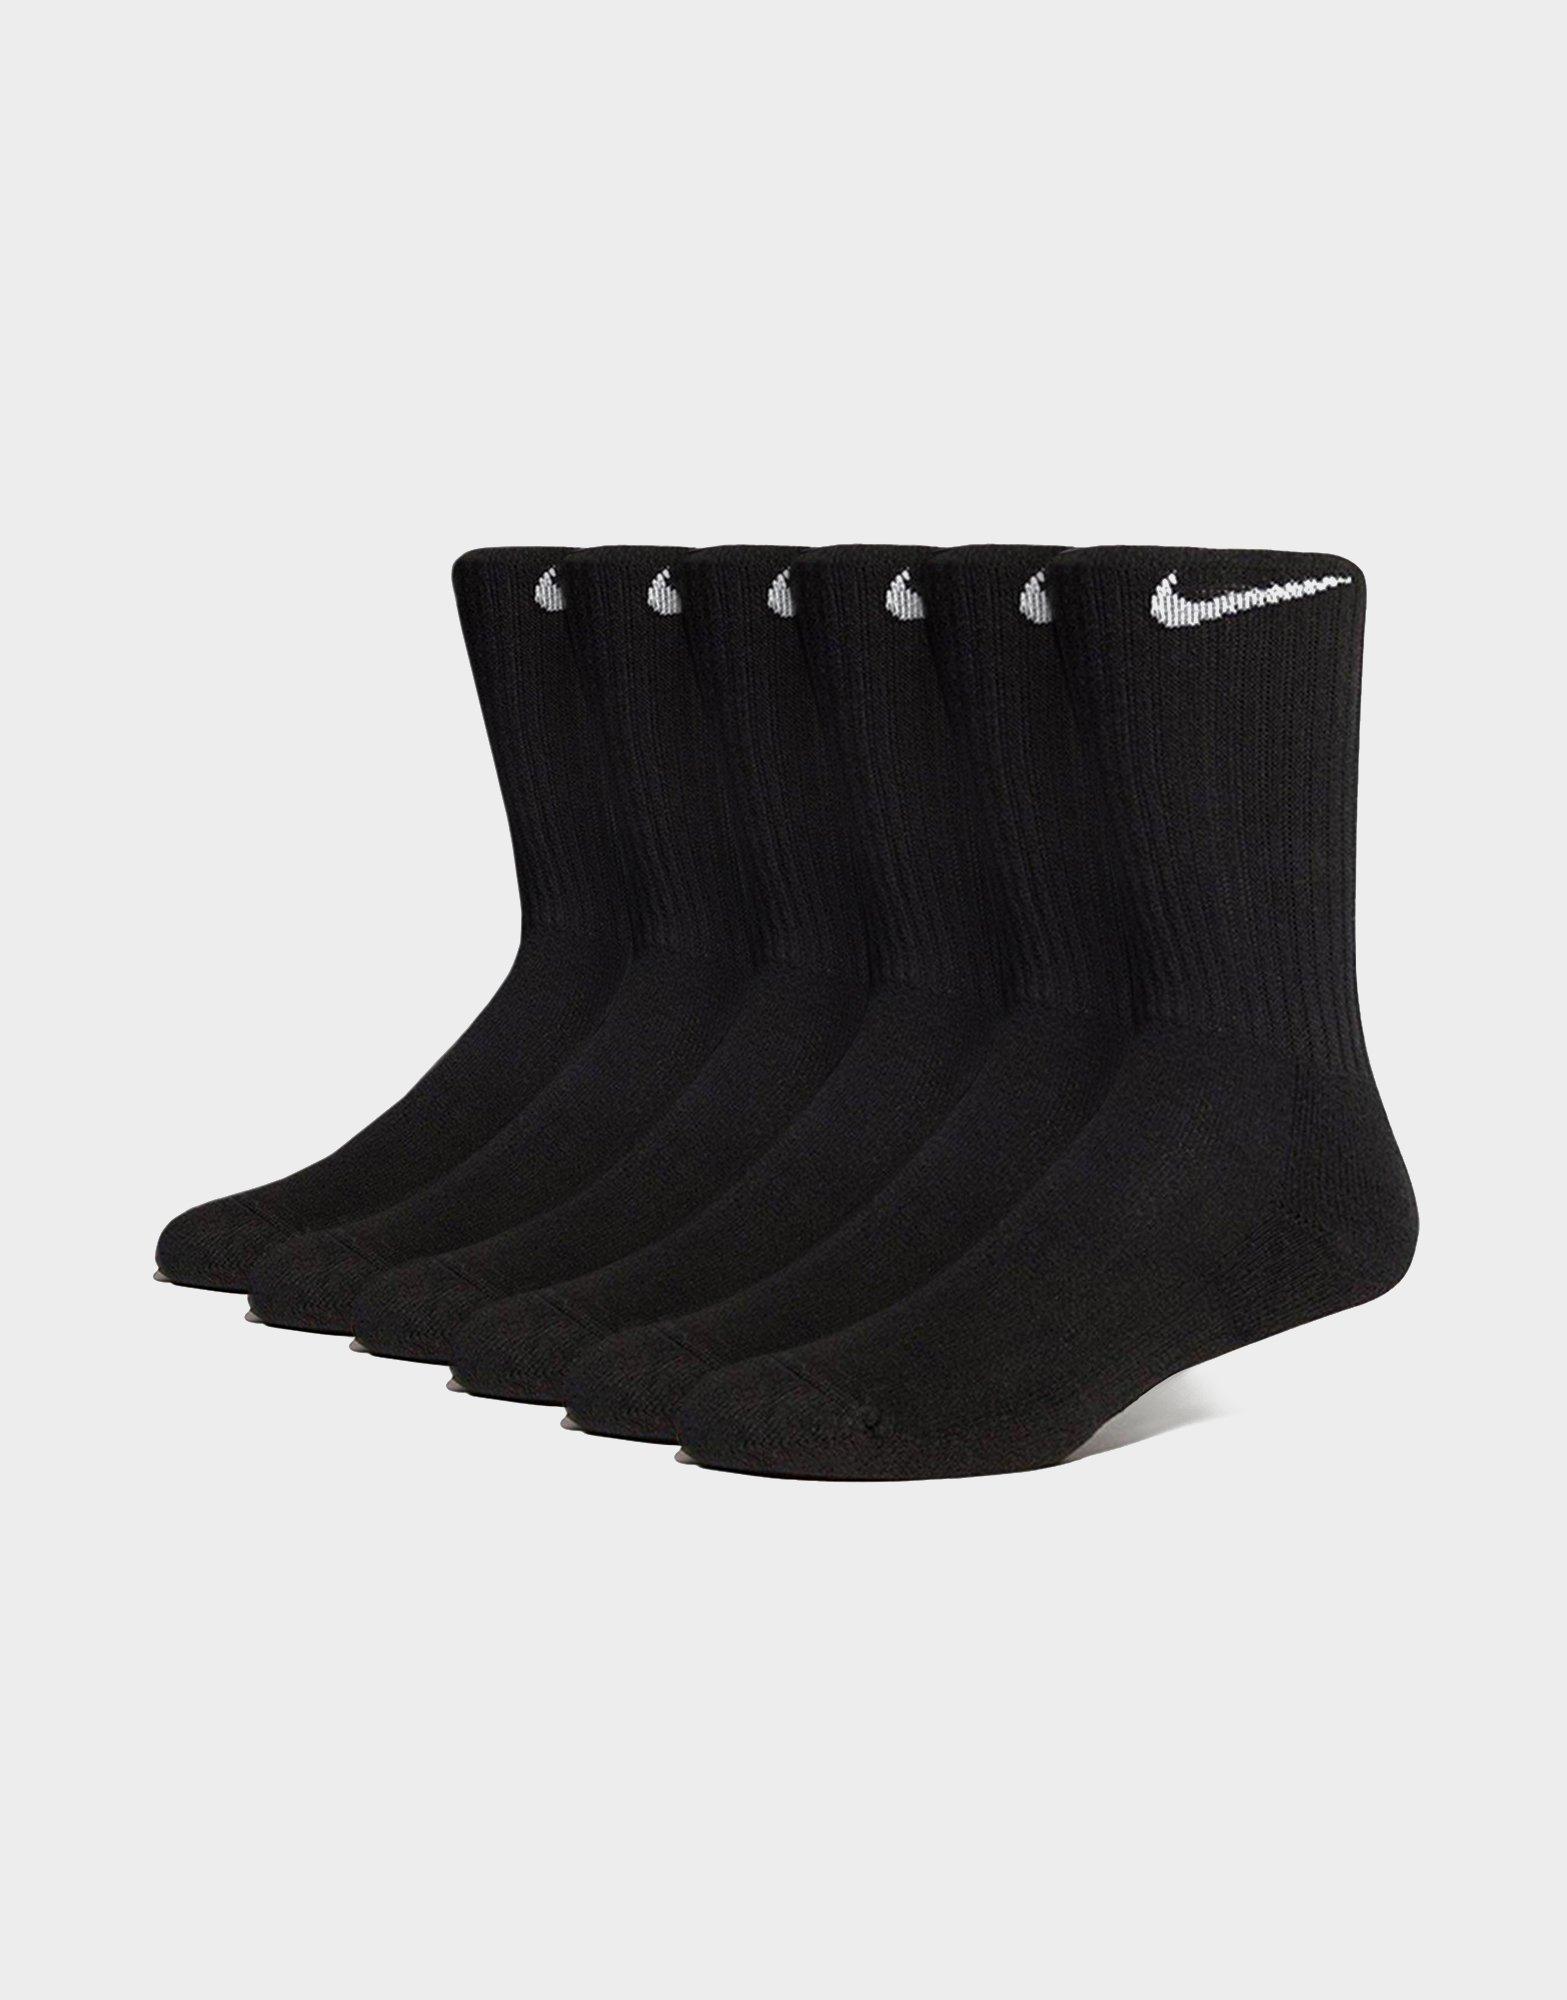 black nike socks 6 pack